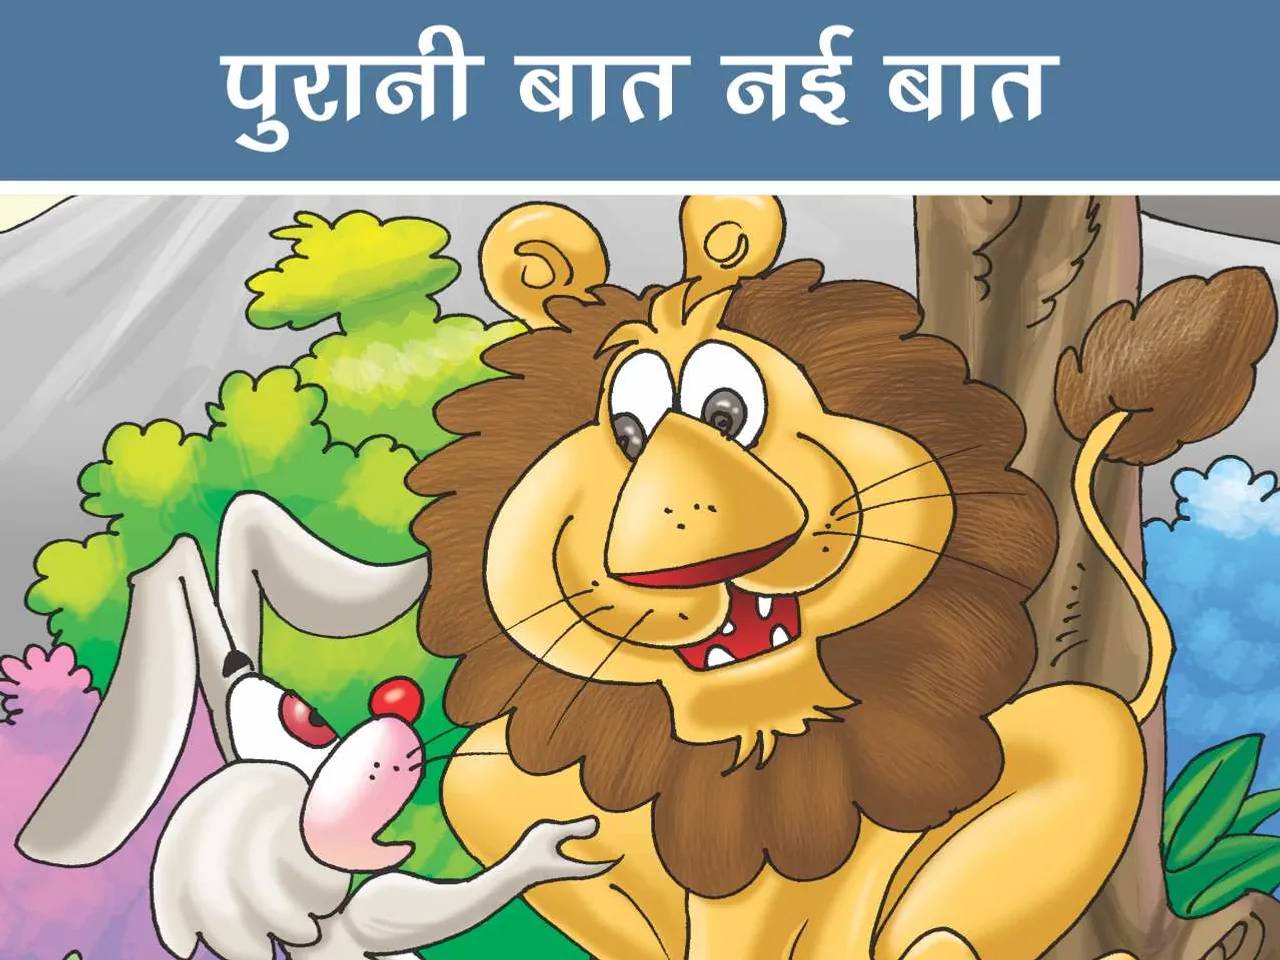 Lion and rabbit cartoon image